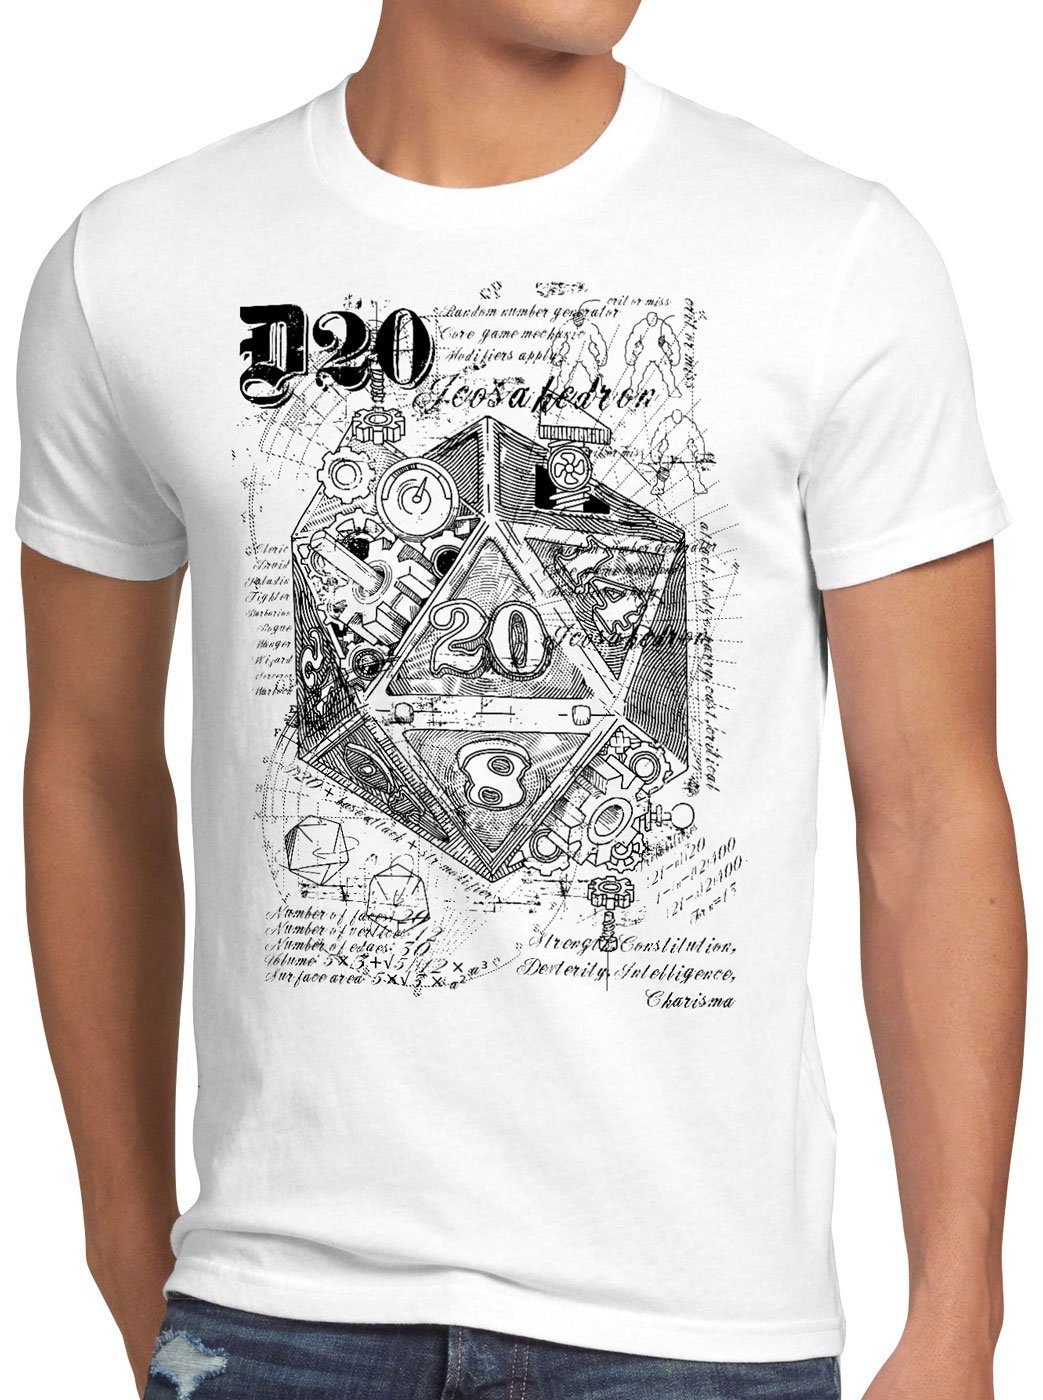 würfel dragons Vinci Print-Shirt T-Shirt style3 weiß Da dungeon D20 Herren